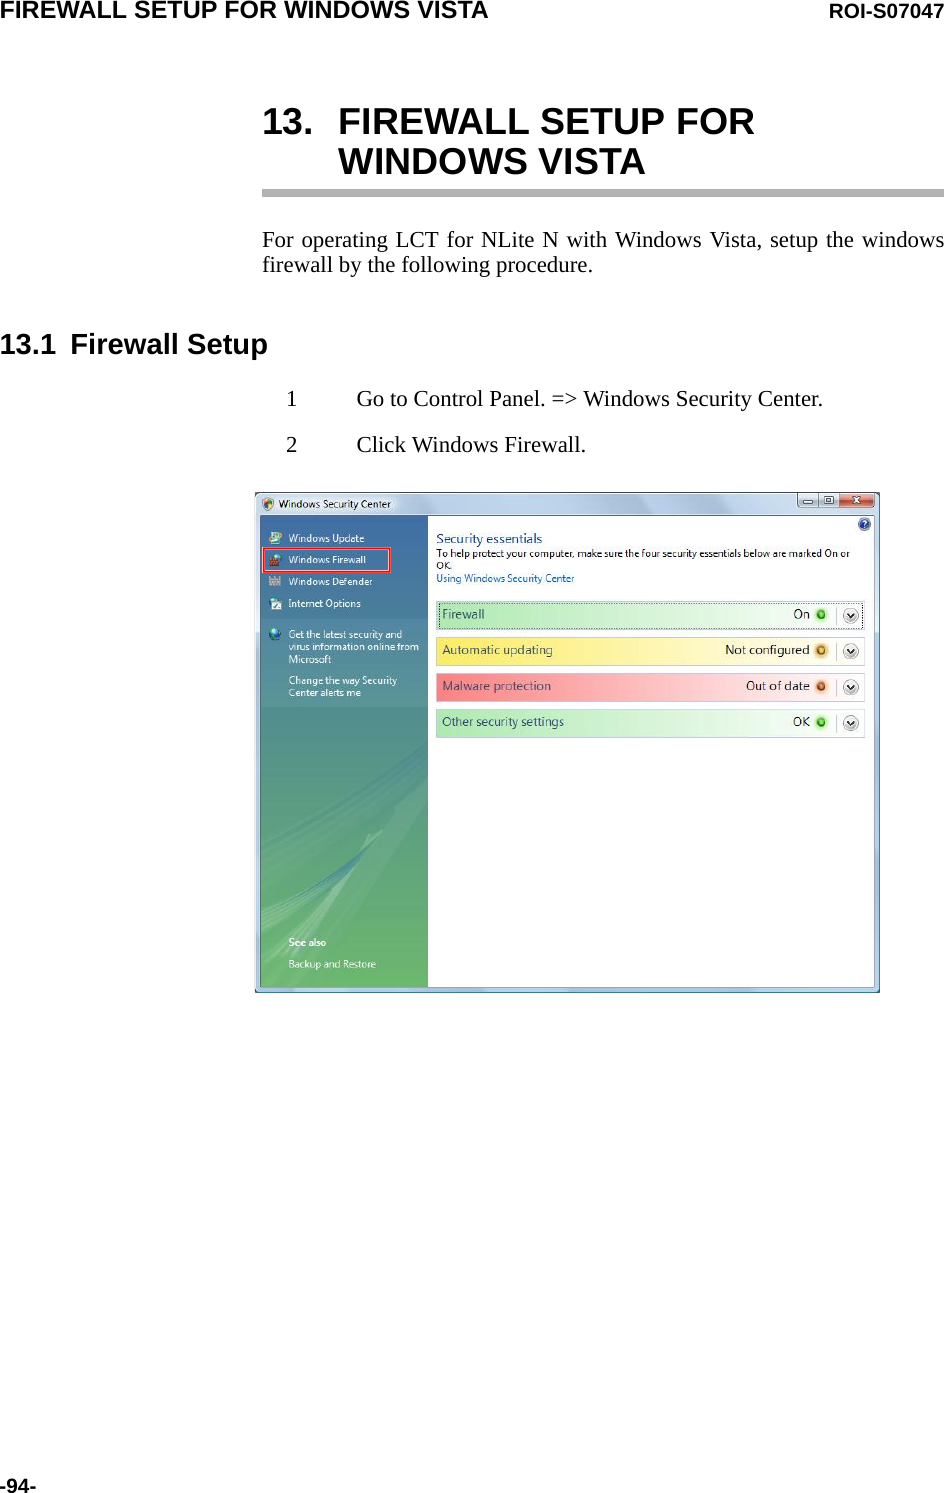 FIREWALL SETUP FOR WINDOWS VISTA ROI-S07047-94-13. FIREWALL SETUP FOR WINDOWS VISTAFor operating LCT for NLite N with Windows Vista, setup the windowsfirewall by the following procedure.13.1 Firewall Setup1 Go to Control Panel. =&gt; Windows Security Center.2 Click Windows Firewall.